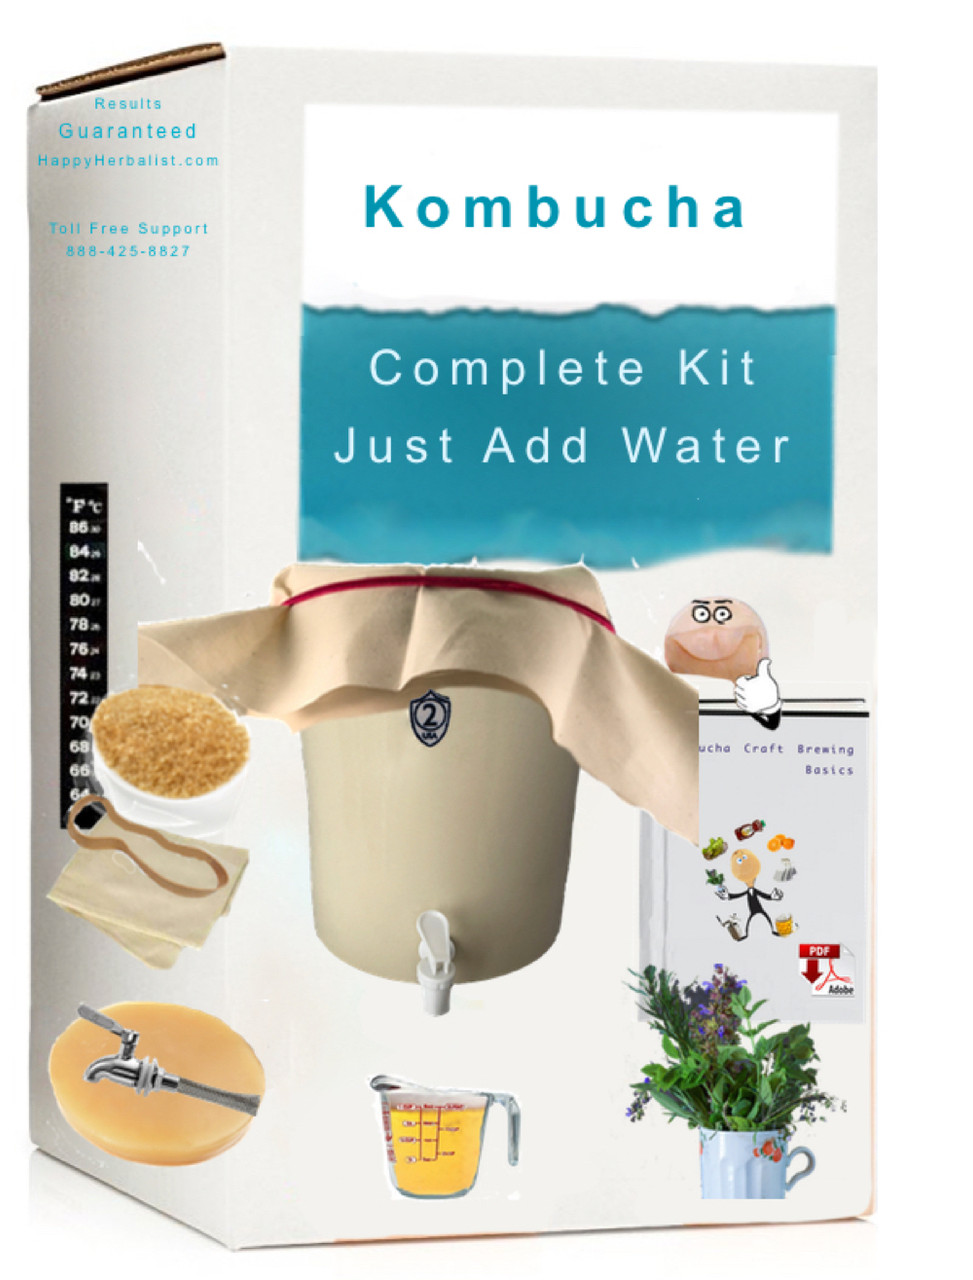 Kombucha Brewing Kit